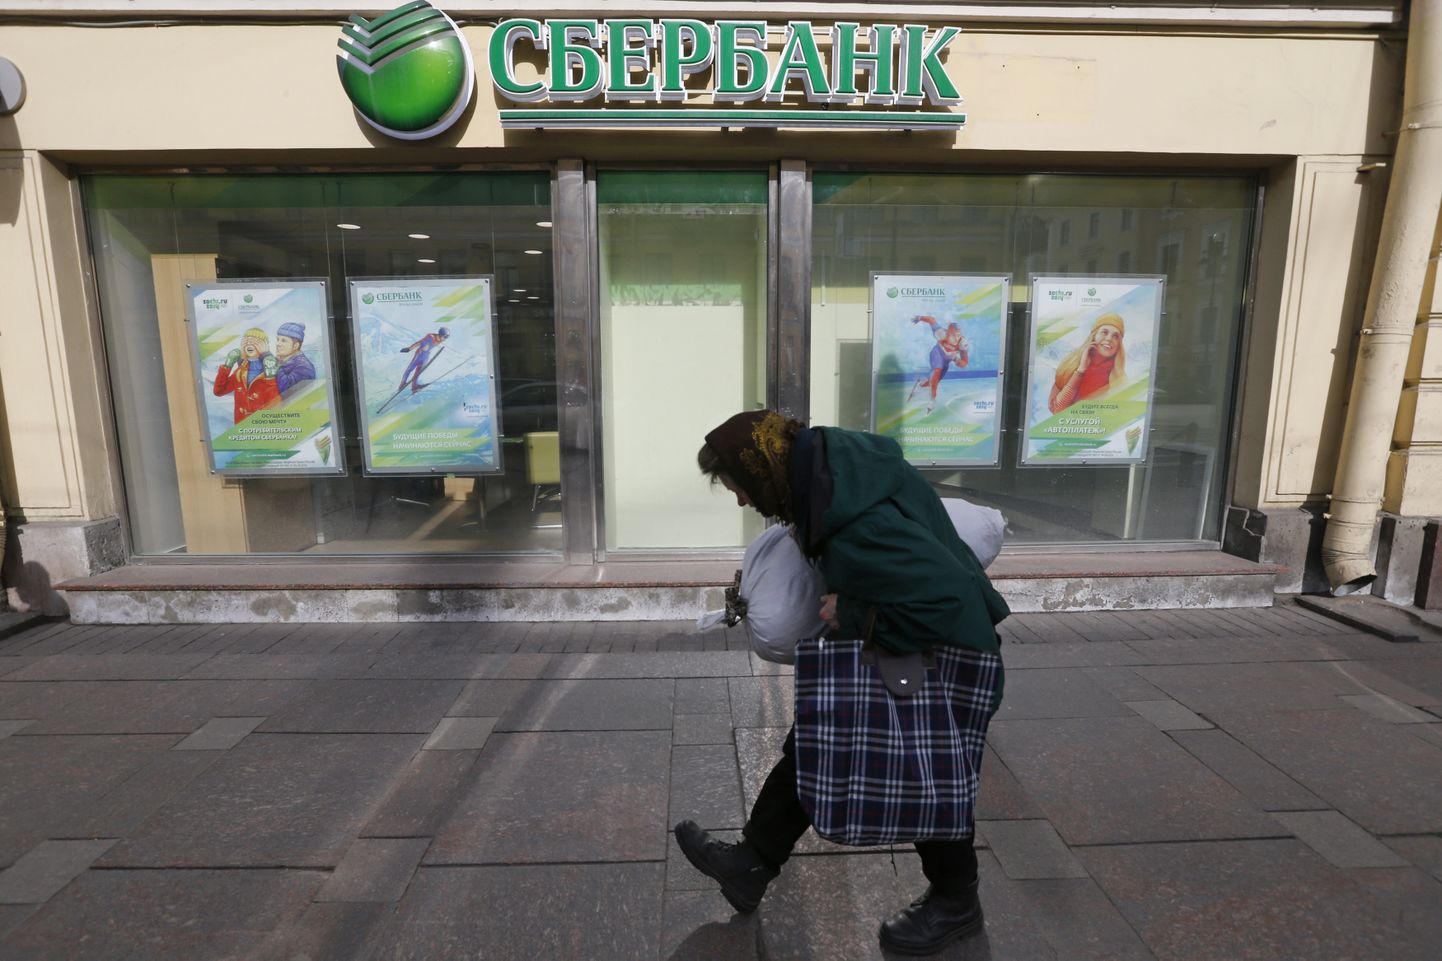 Sberbankil on ligi 103 miljonit jaeklienti